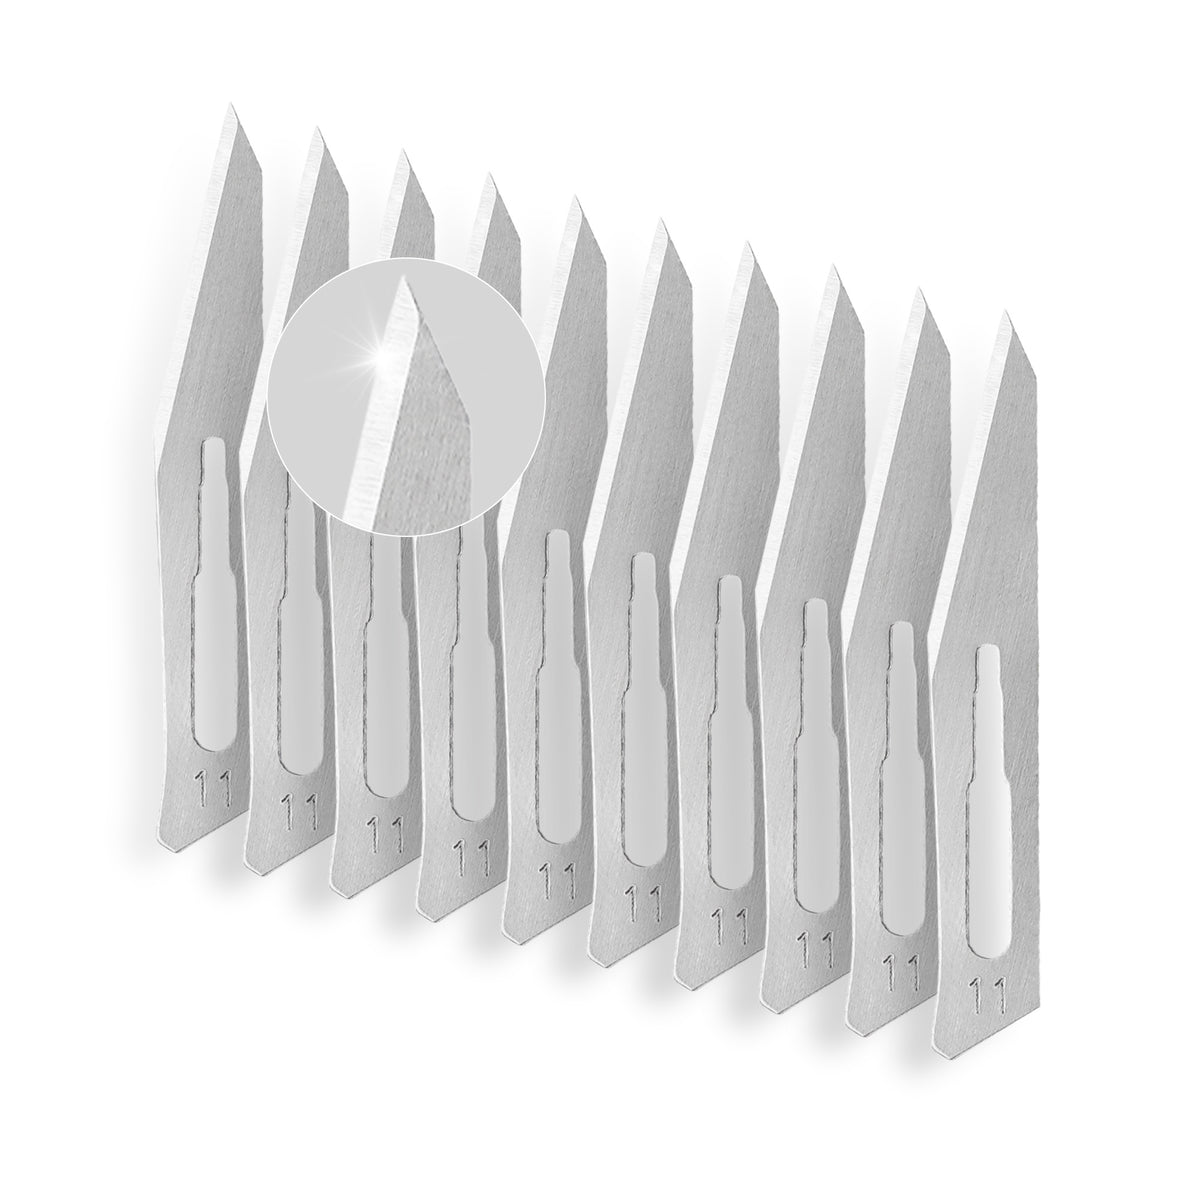 KA39 10pcs #11 Knife Blades Replacement Utility Knife Blade